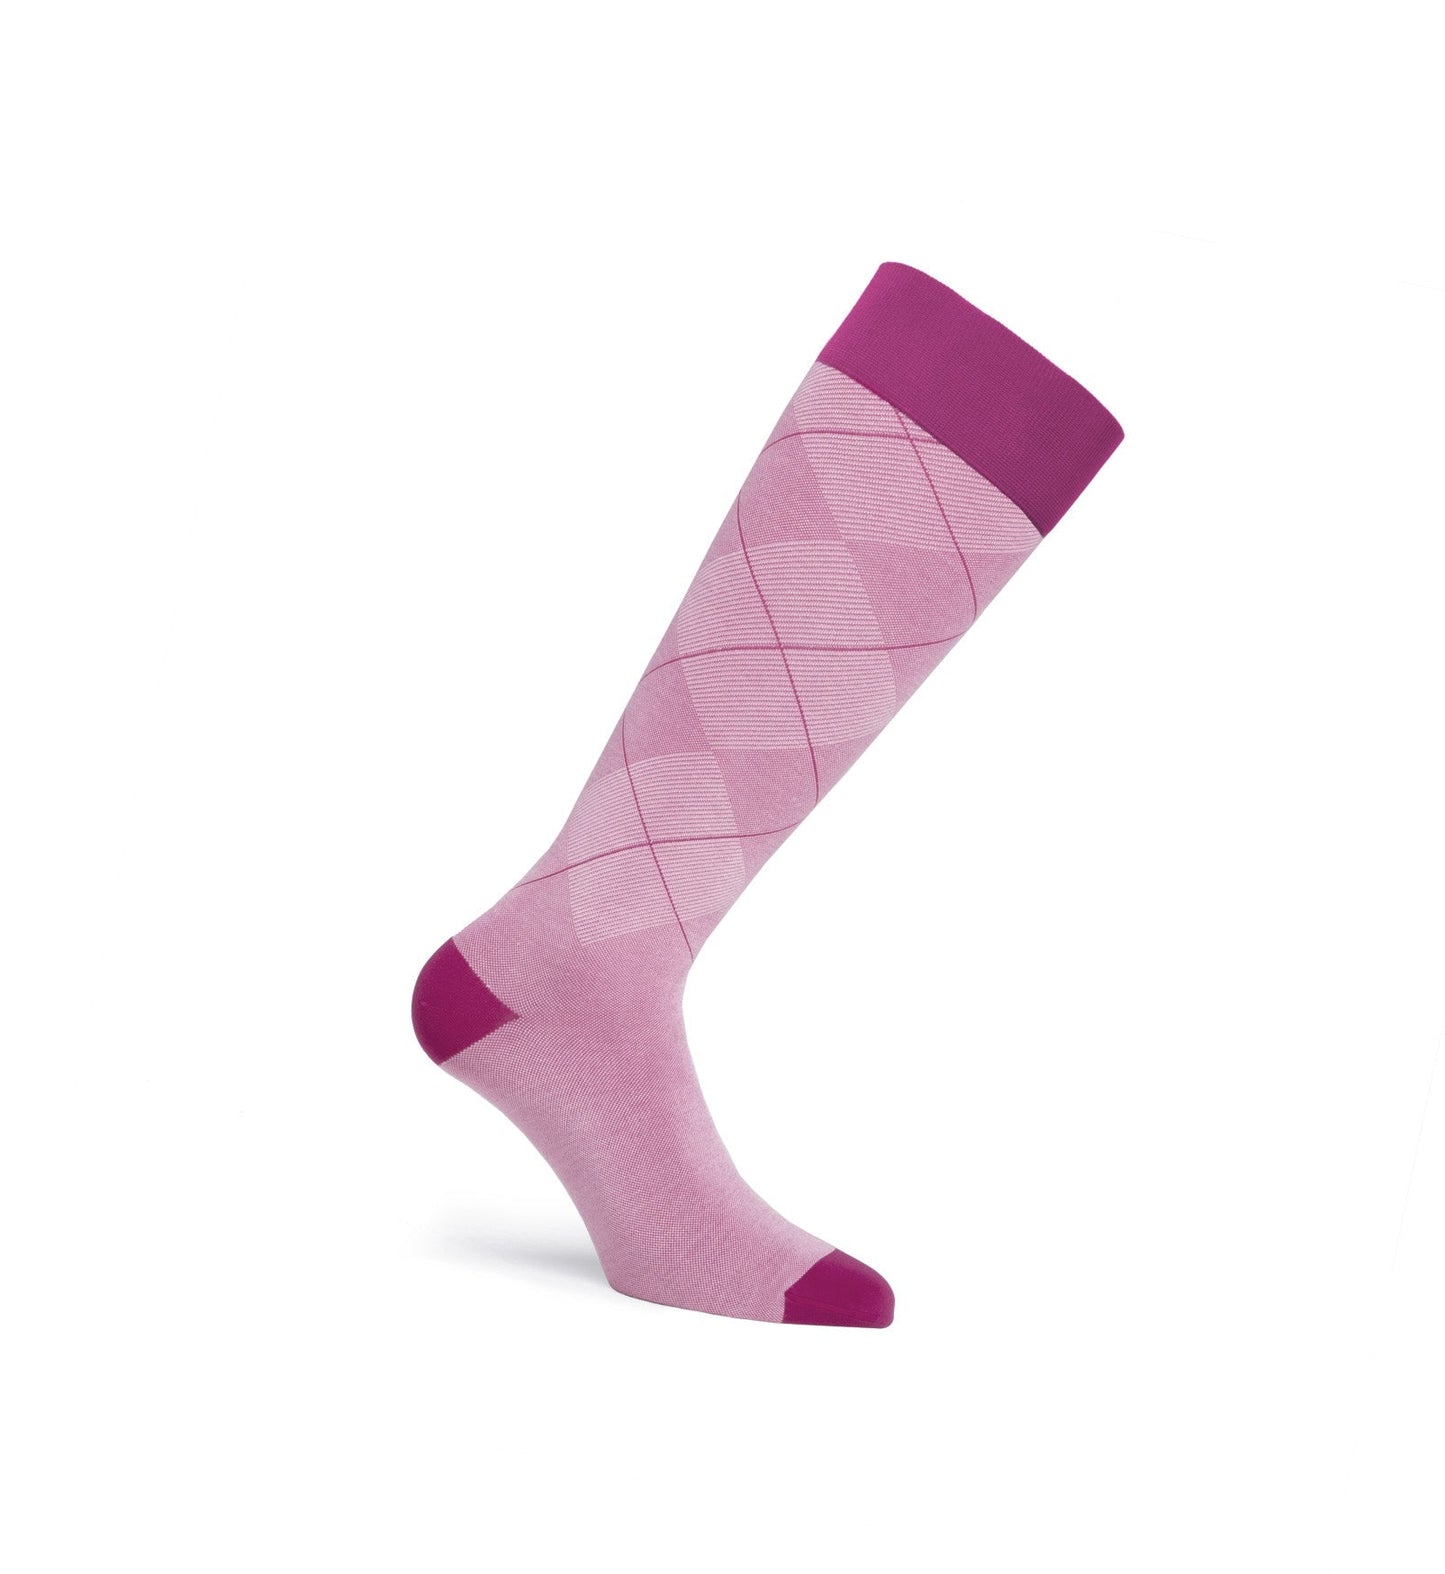 JOBST Casual Pattern Compression Socks 15-20 mmHg, Knee High, Closed Toe Long Length